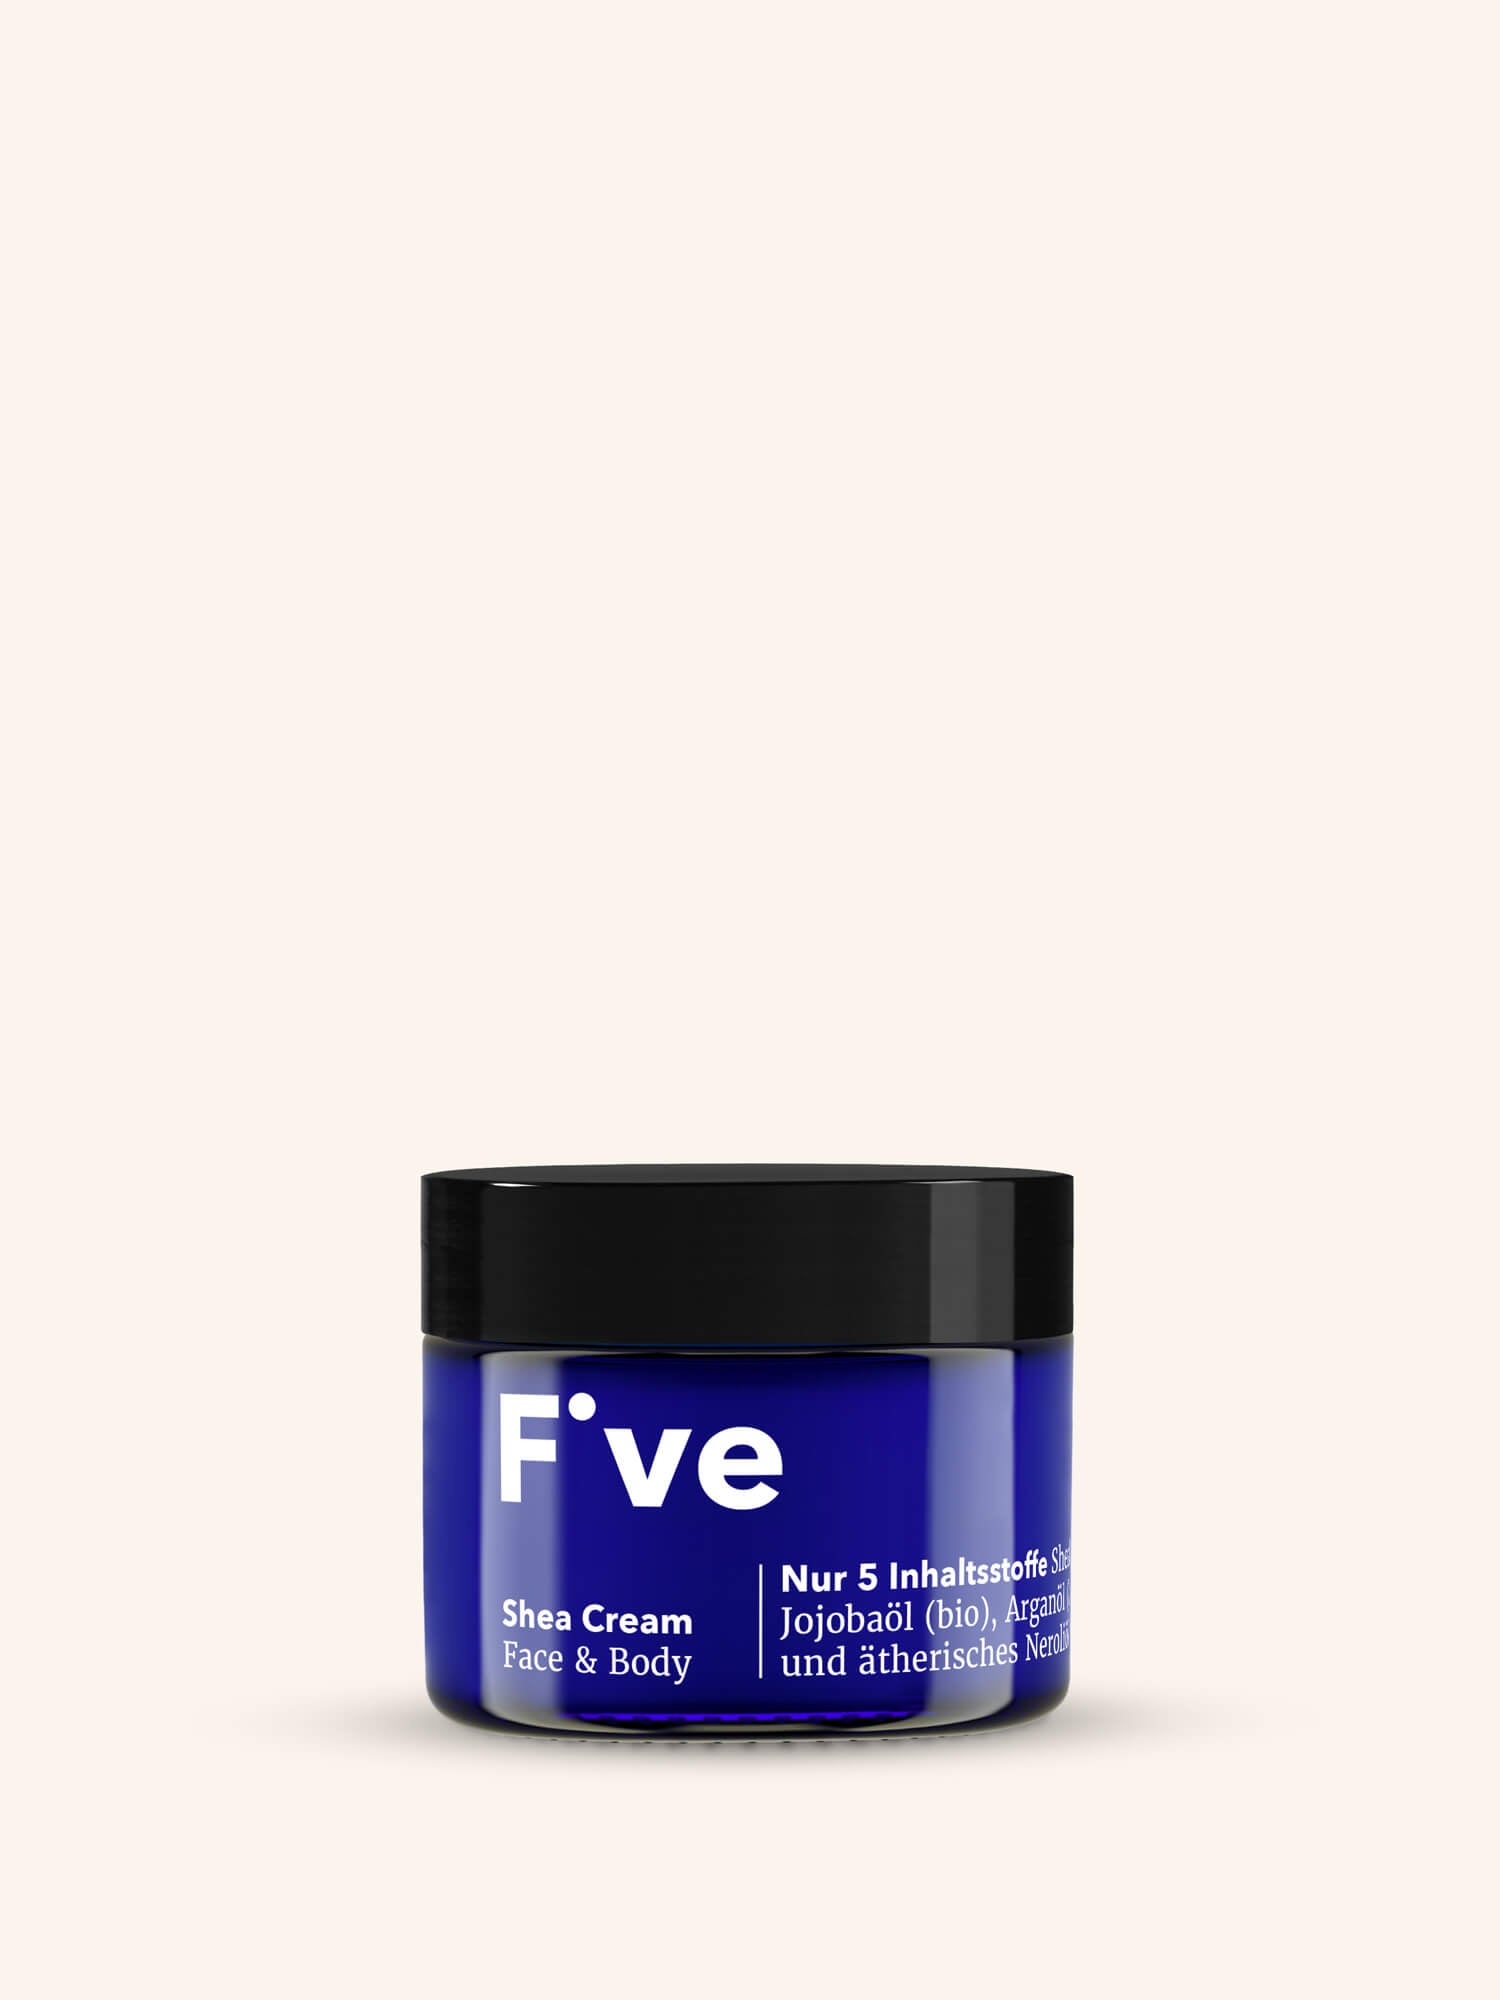 FIVE Shea Cream: Sheabutter-Creme für trockene Haut | Five Skincare